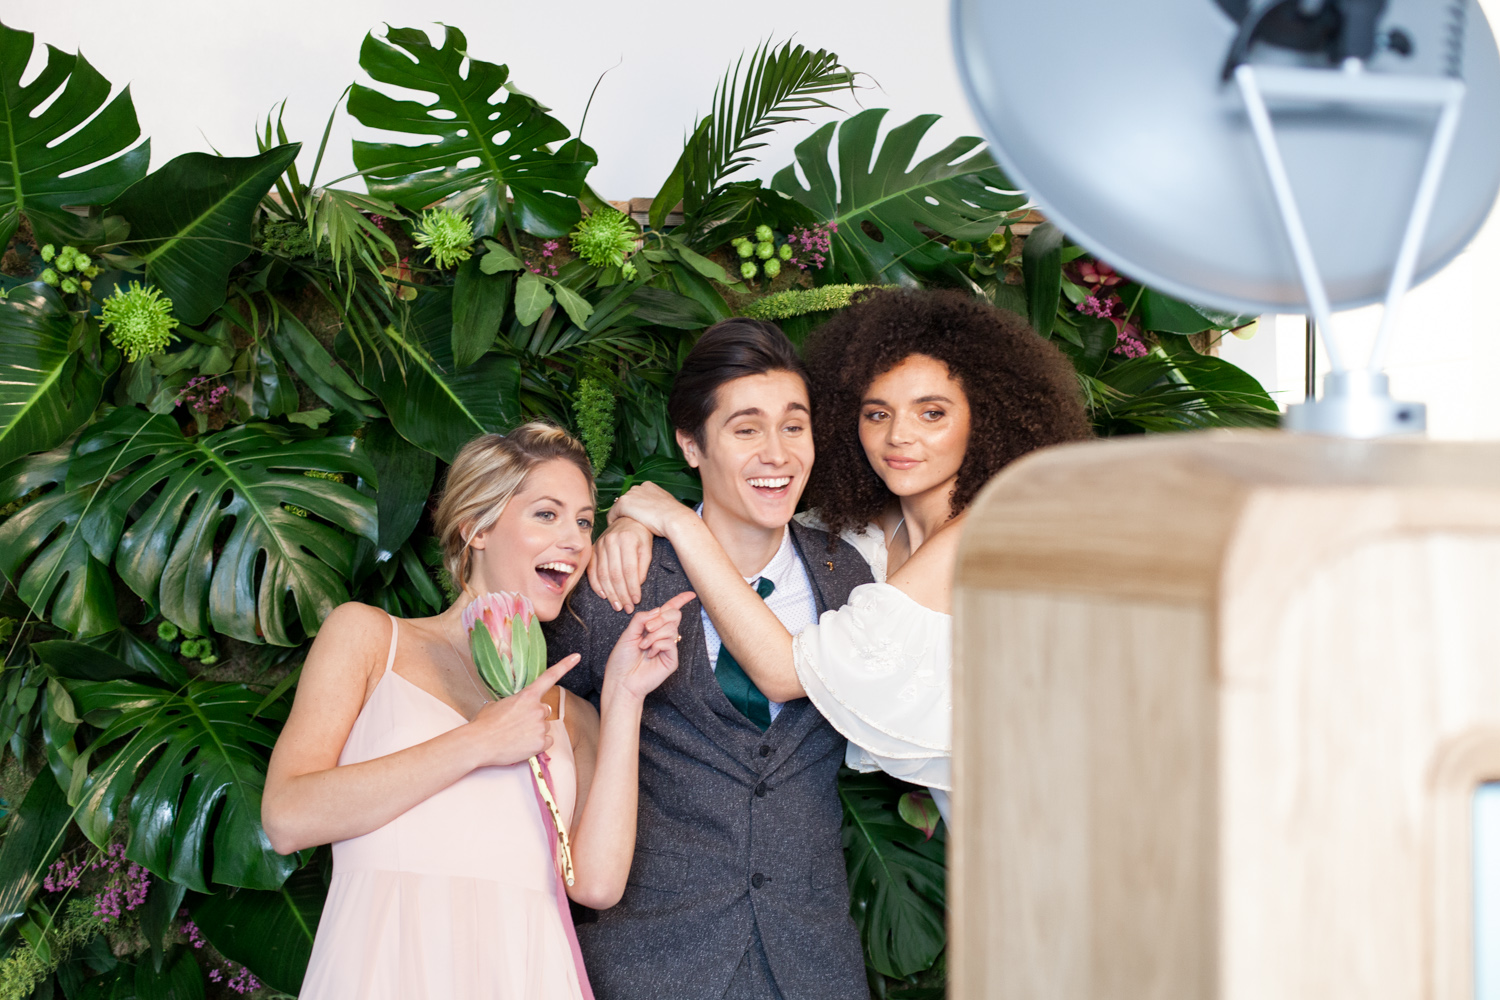 Give your wedding a distinctive edge – Event Rhino launches the Hallmark